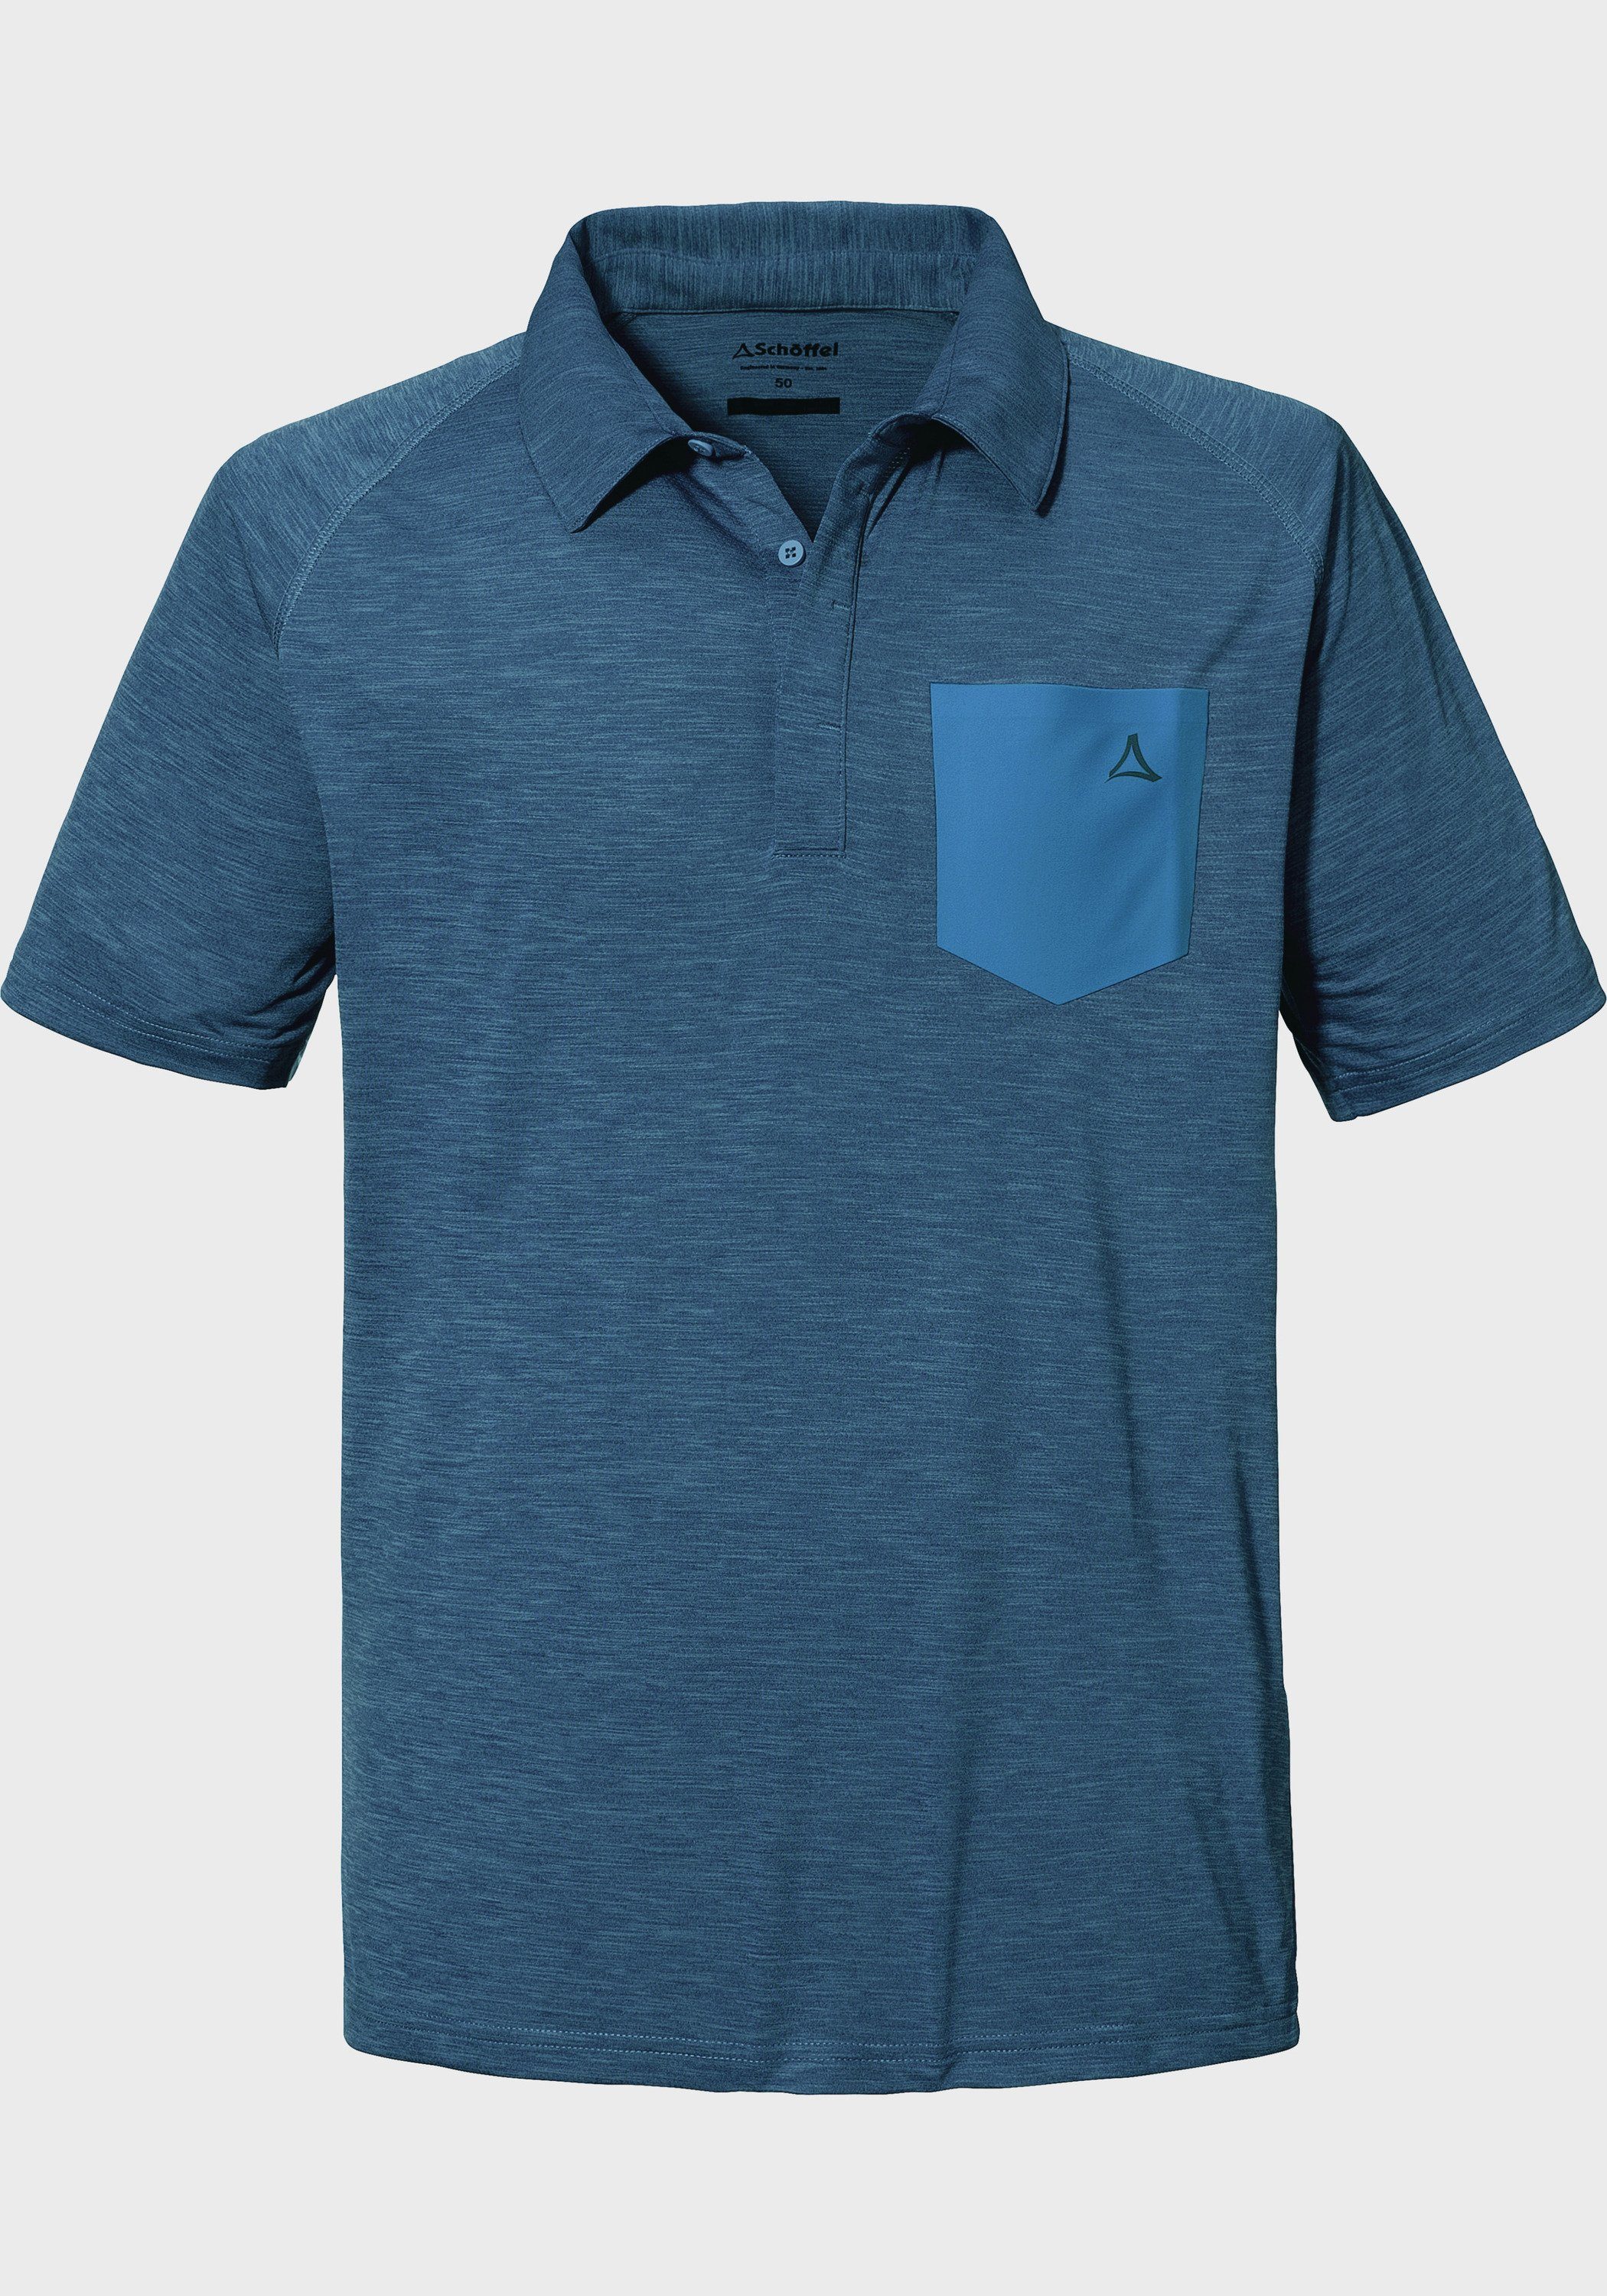 Schöffel Poloshirt Polo Shirt Hocheck M blau